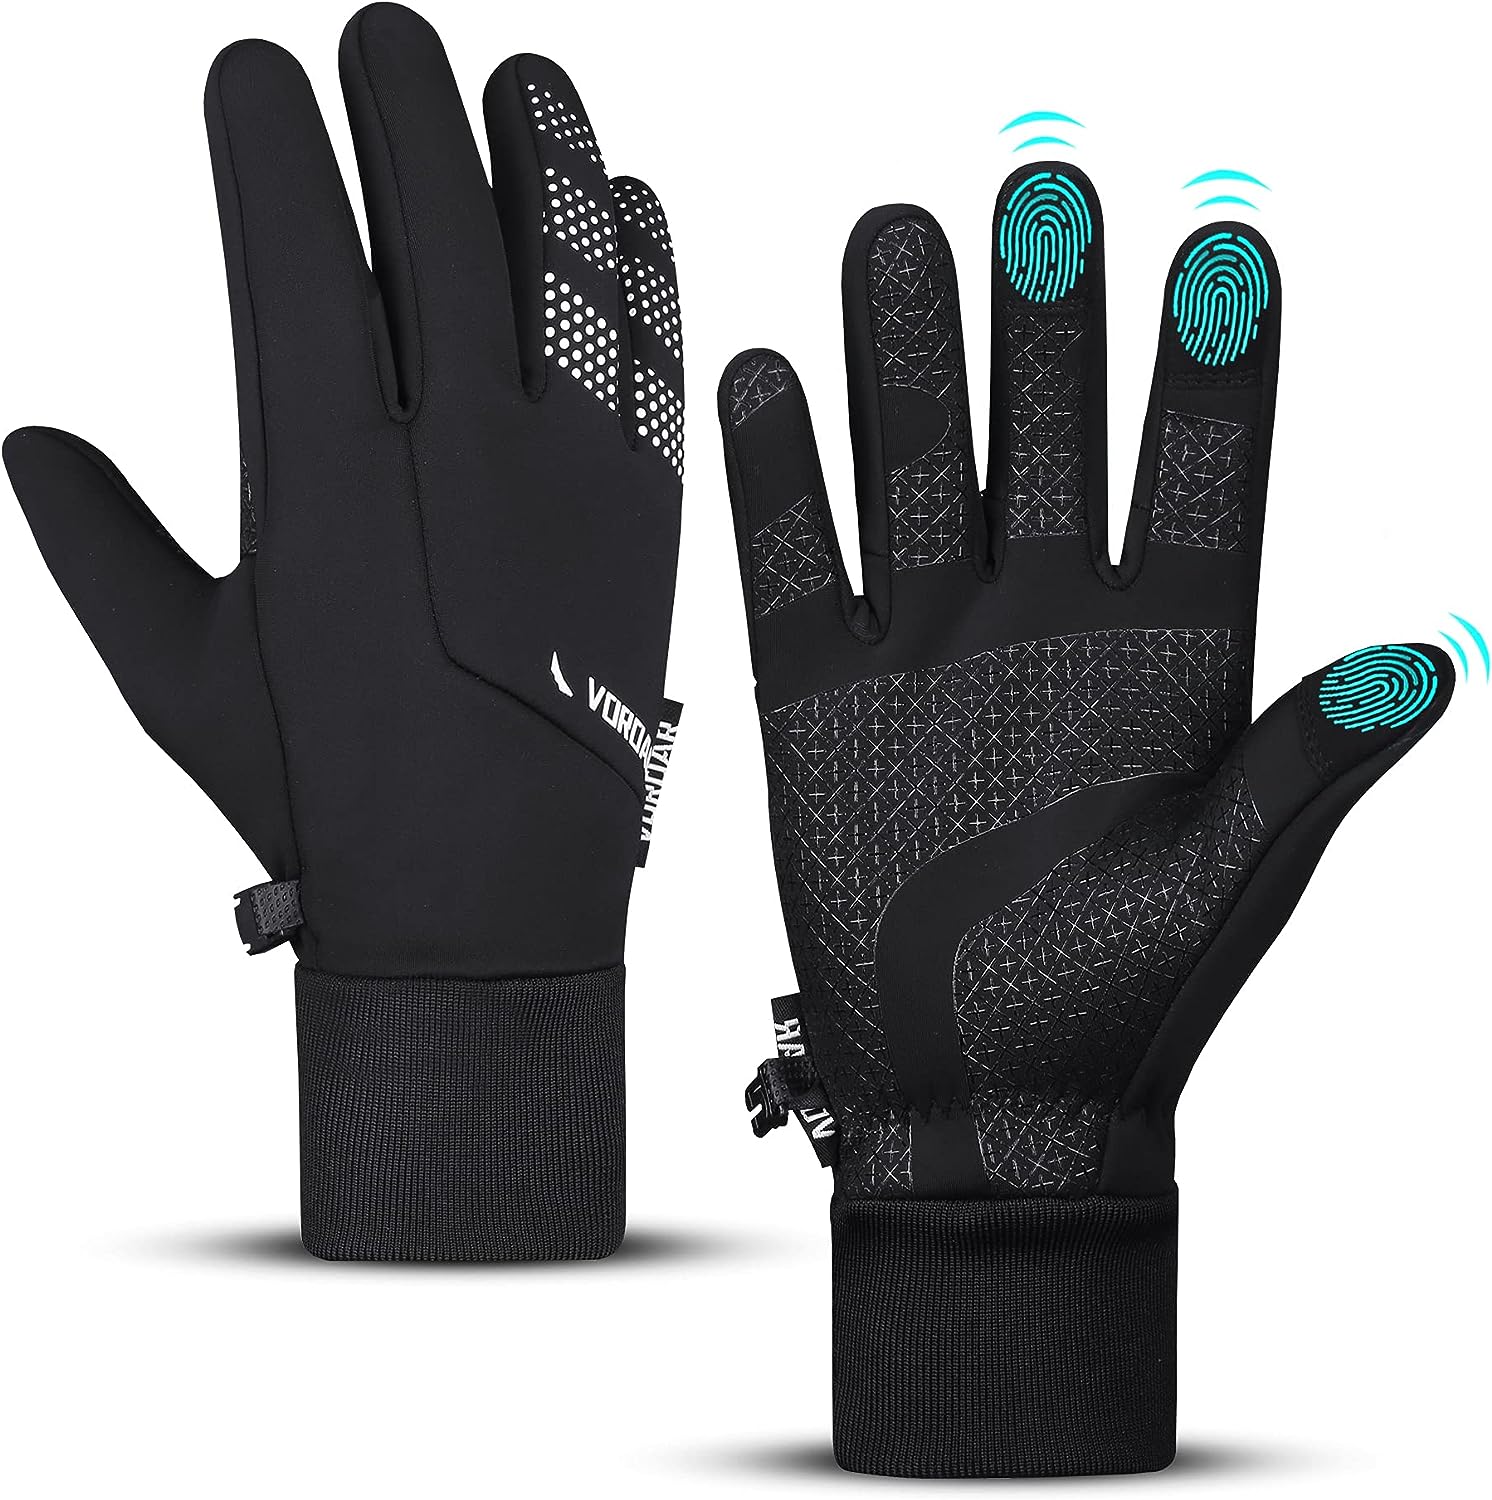 Thermal Winter Gloves for Men Women, Freezer Warm [...]